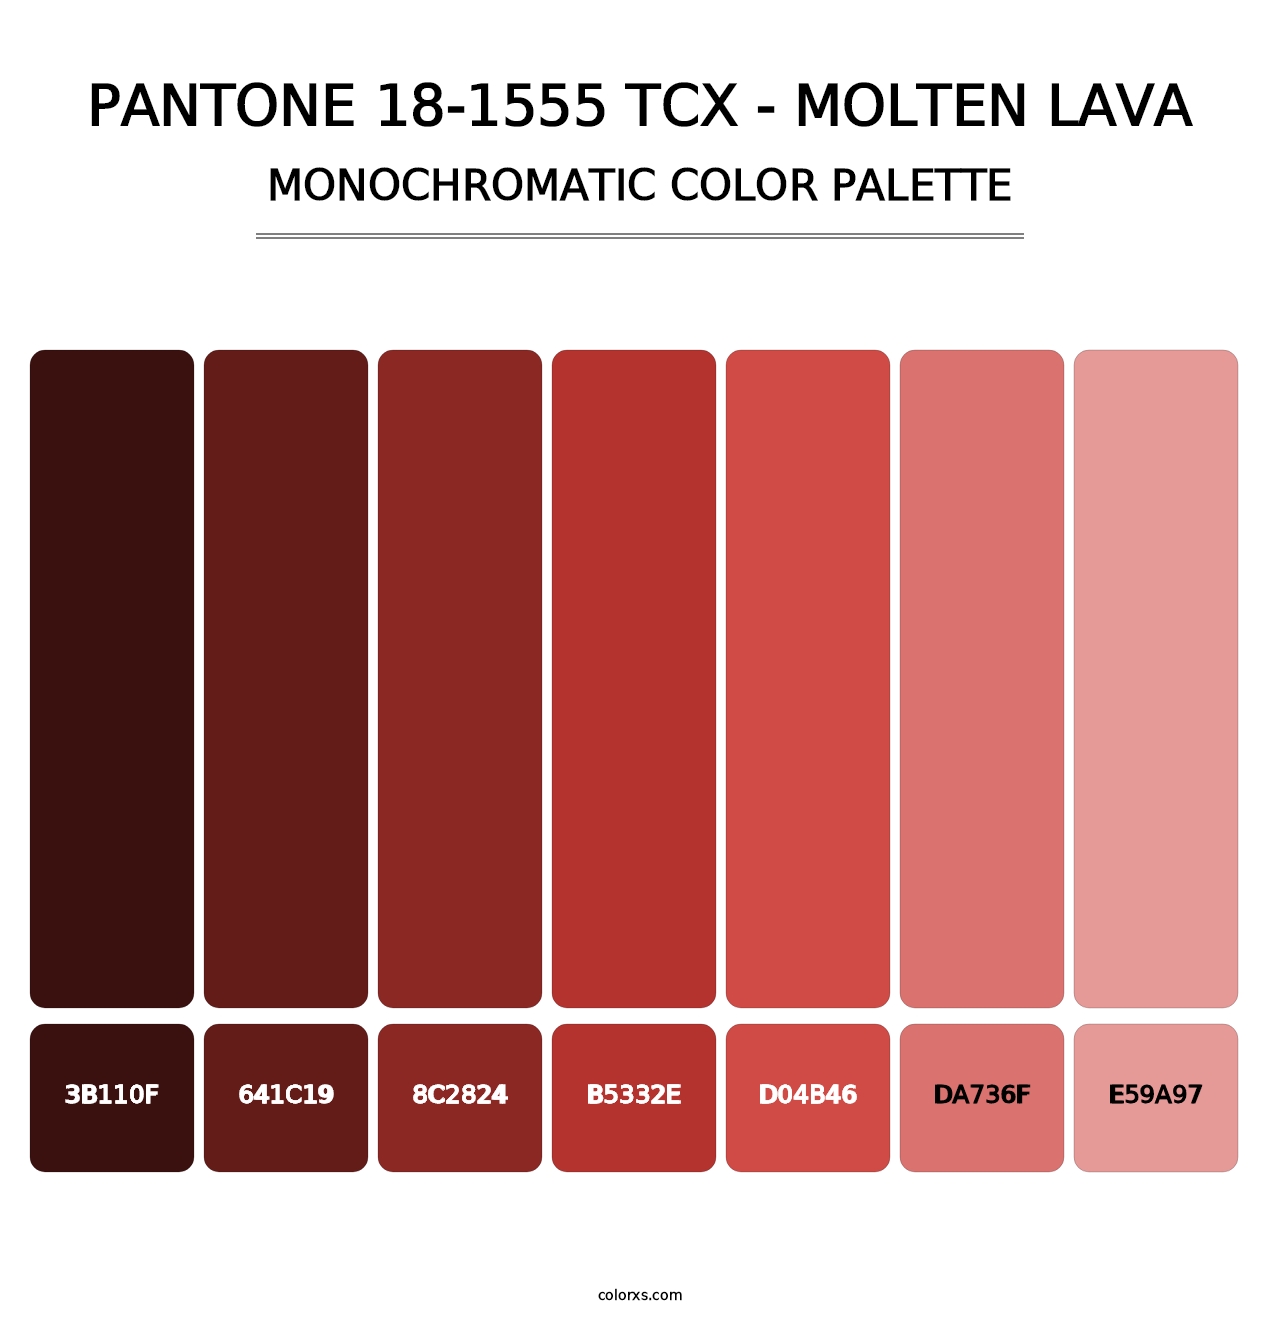 PANTONE 18-1555 TCX - Molten Lava - Monochromatic Color Palette